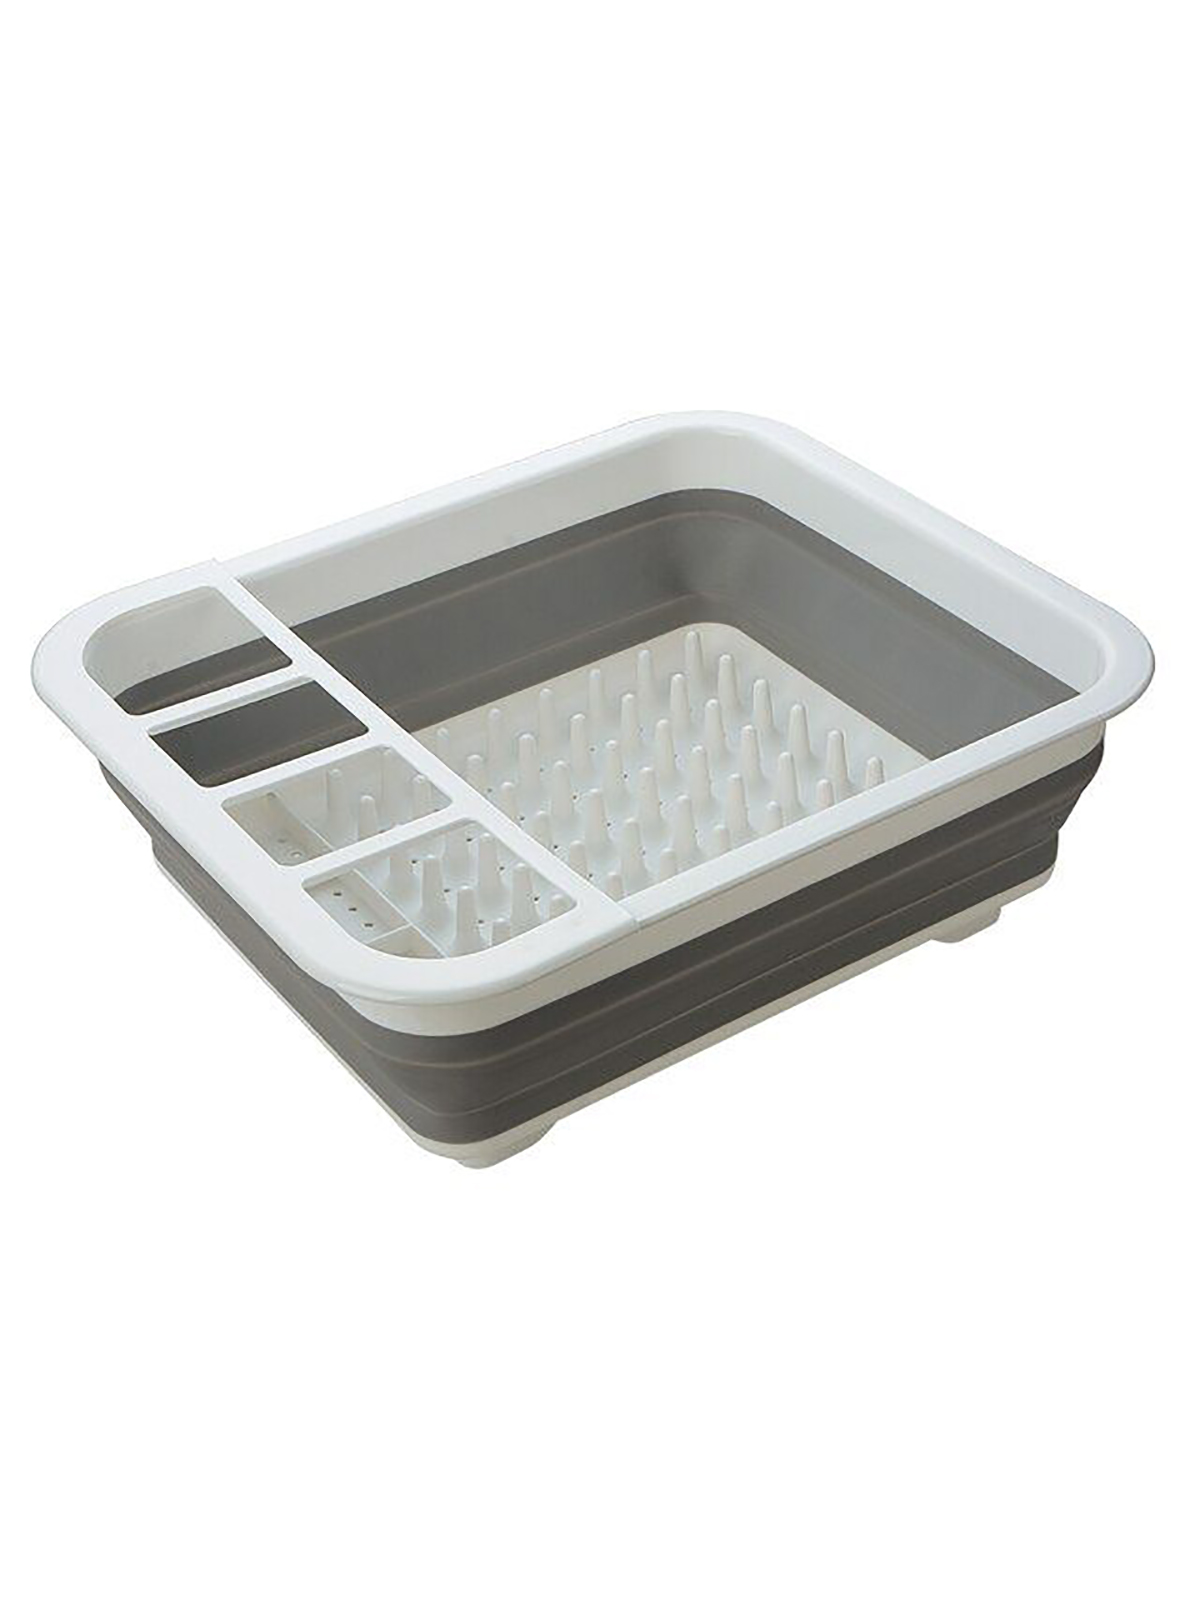 Сушилка для посуды раскладная пластиковая 36,5x37x12,5 см, Bohmann, 02558BH